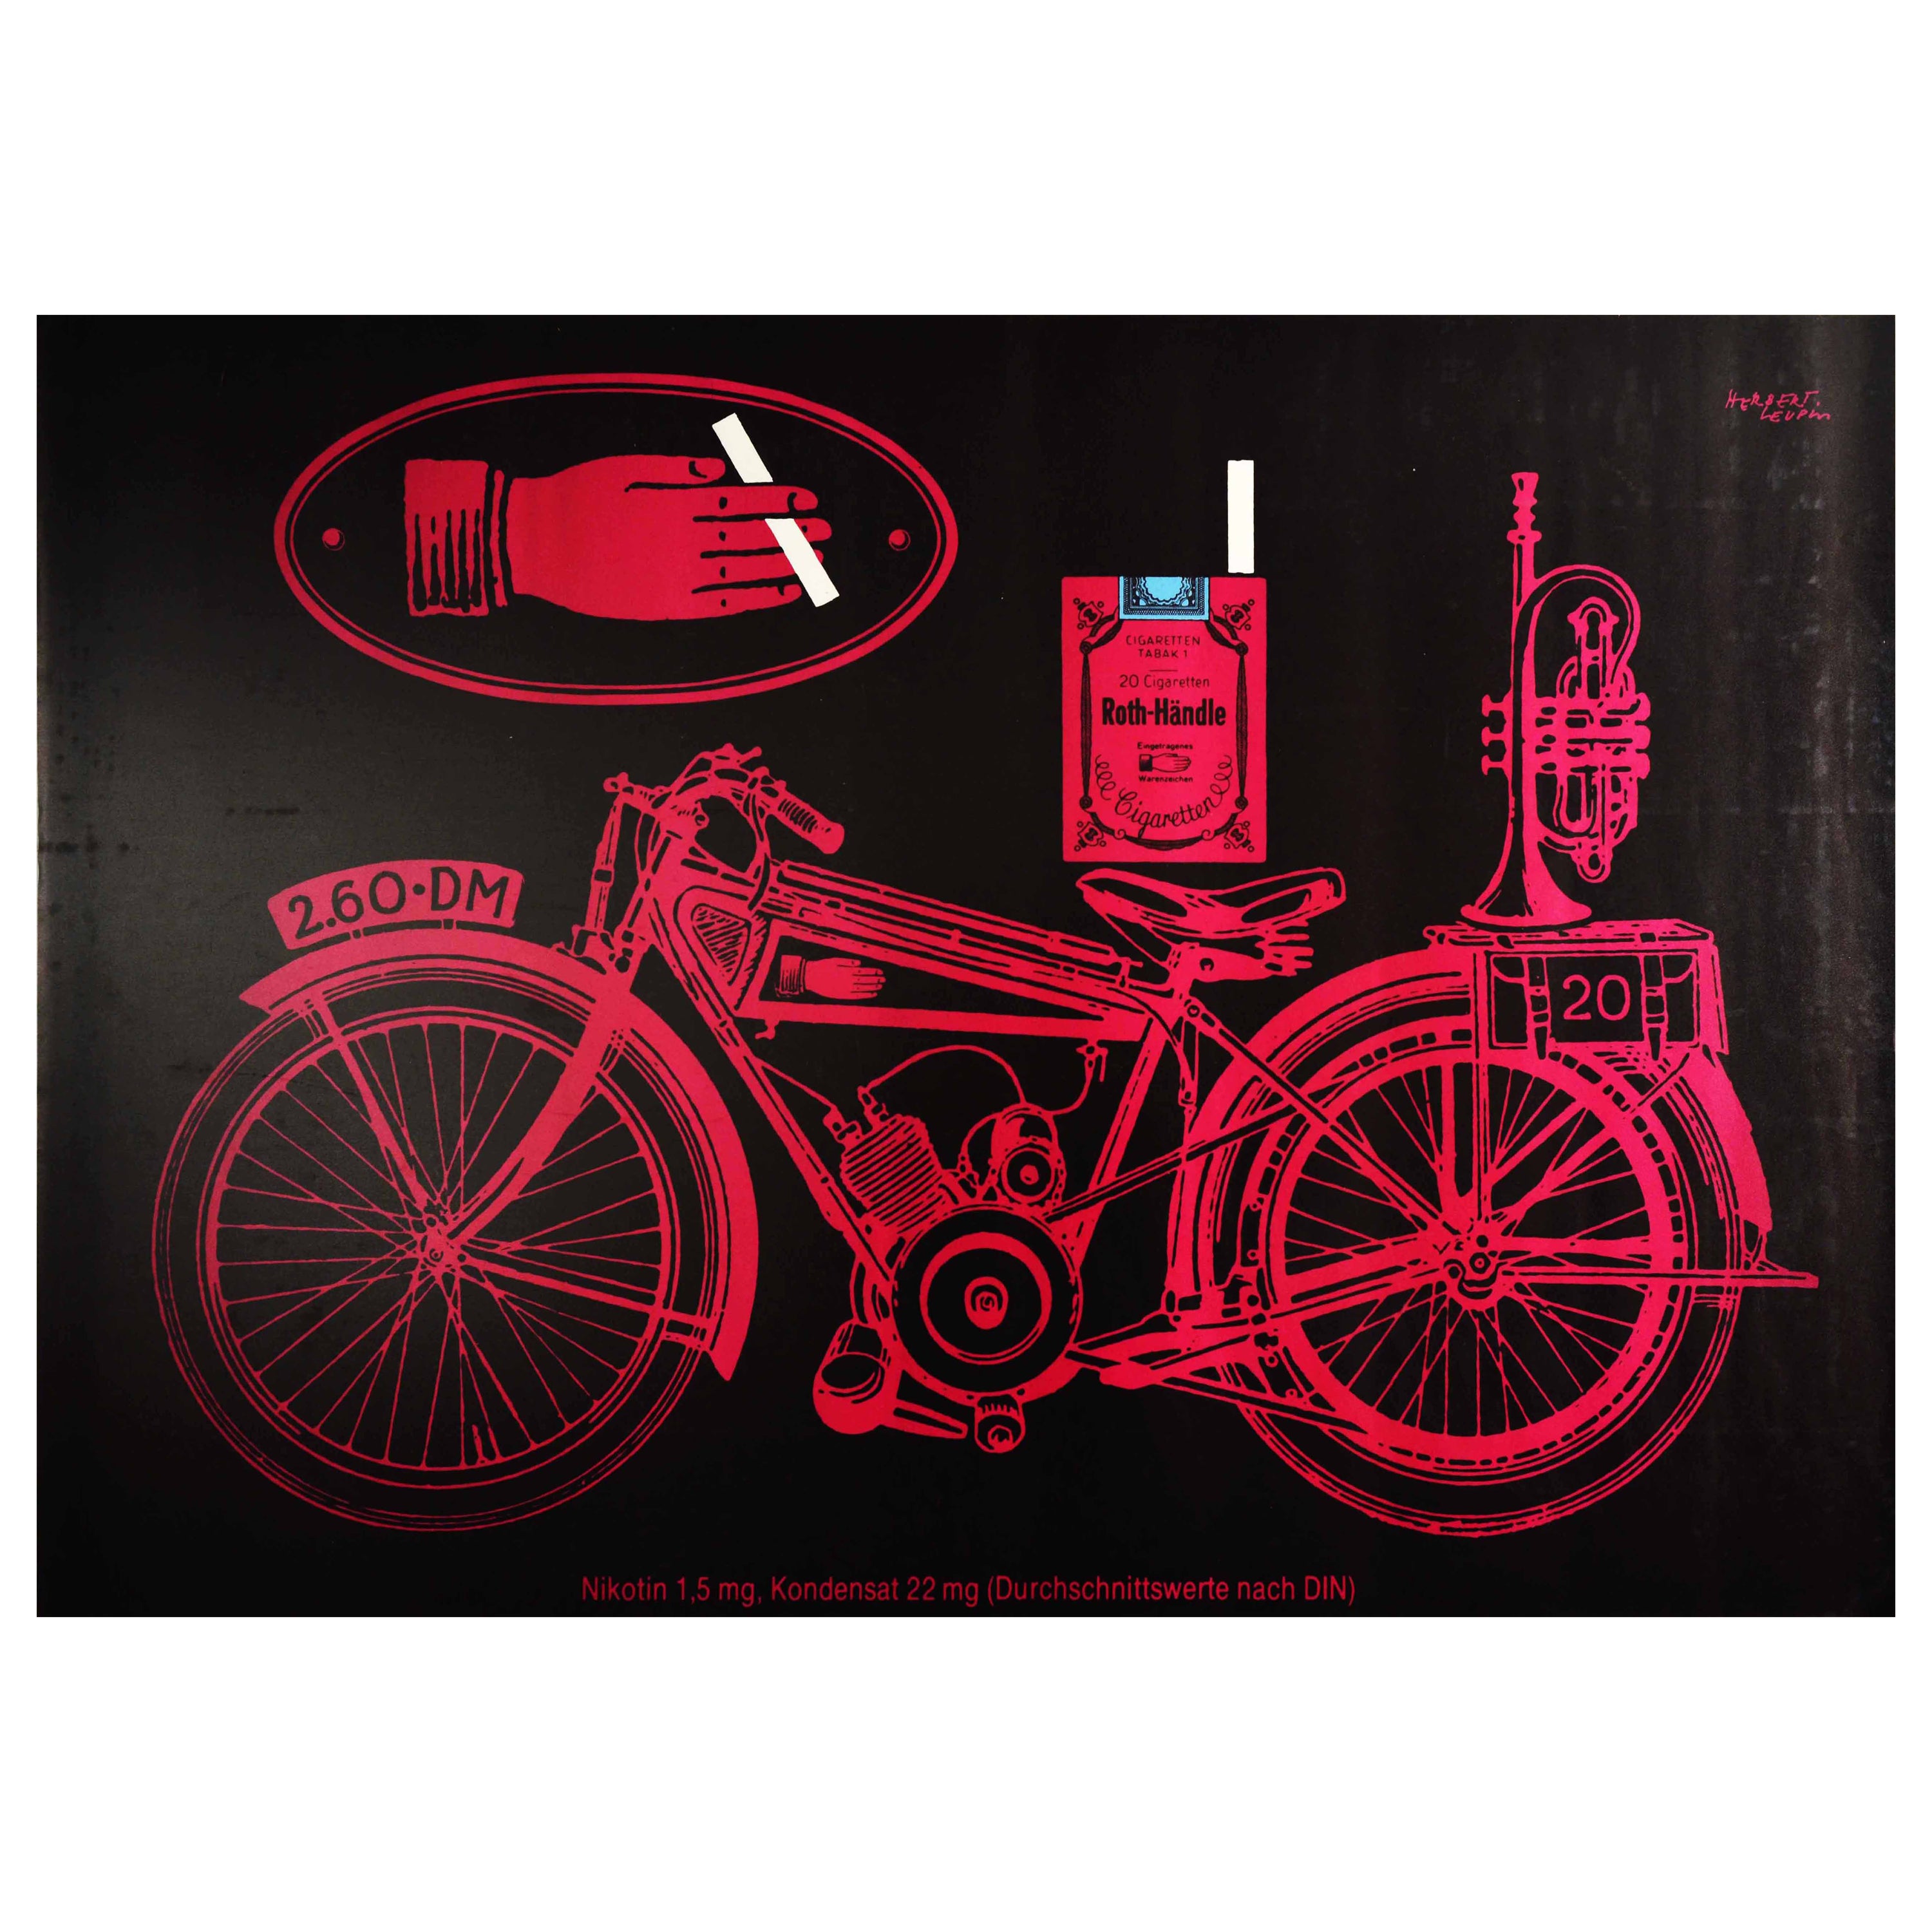 Original Vintage Poster Roth Handle Cigarettes Tobacco Smoking Motorcycle Design For Sale